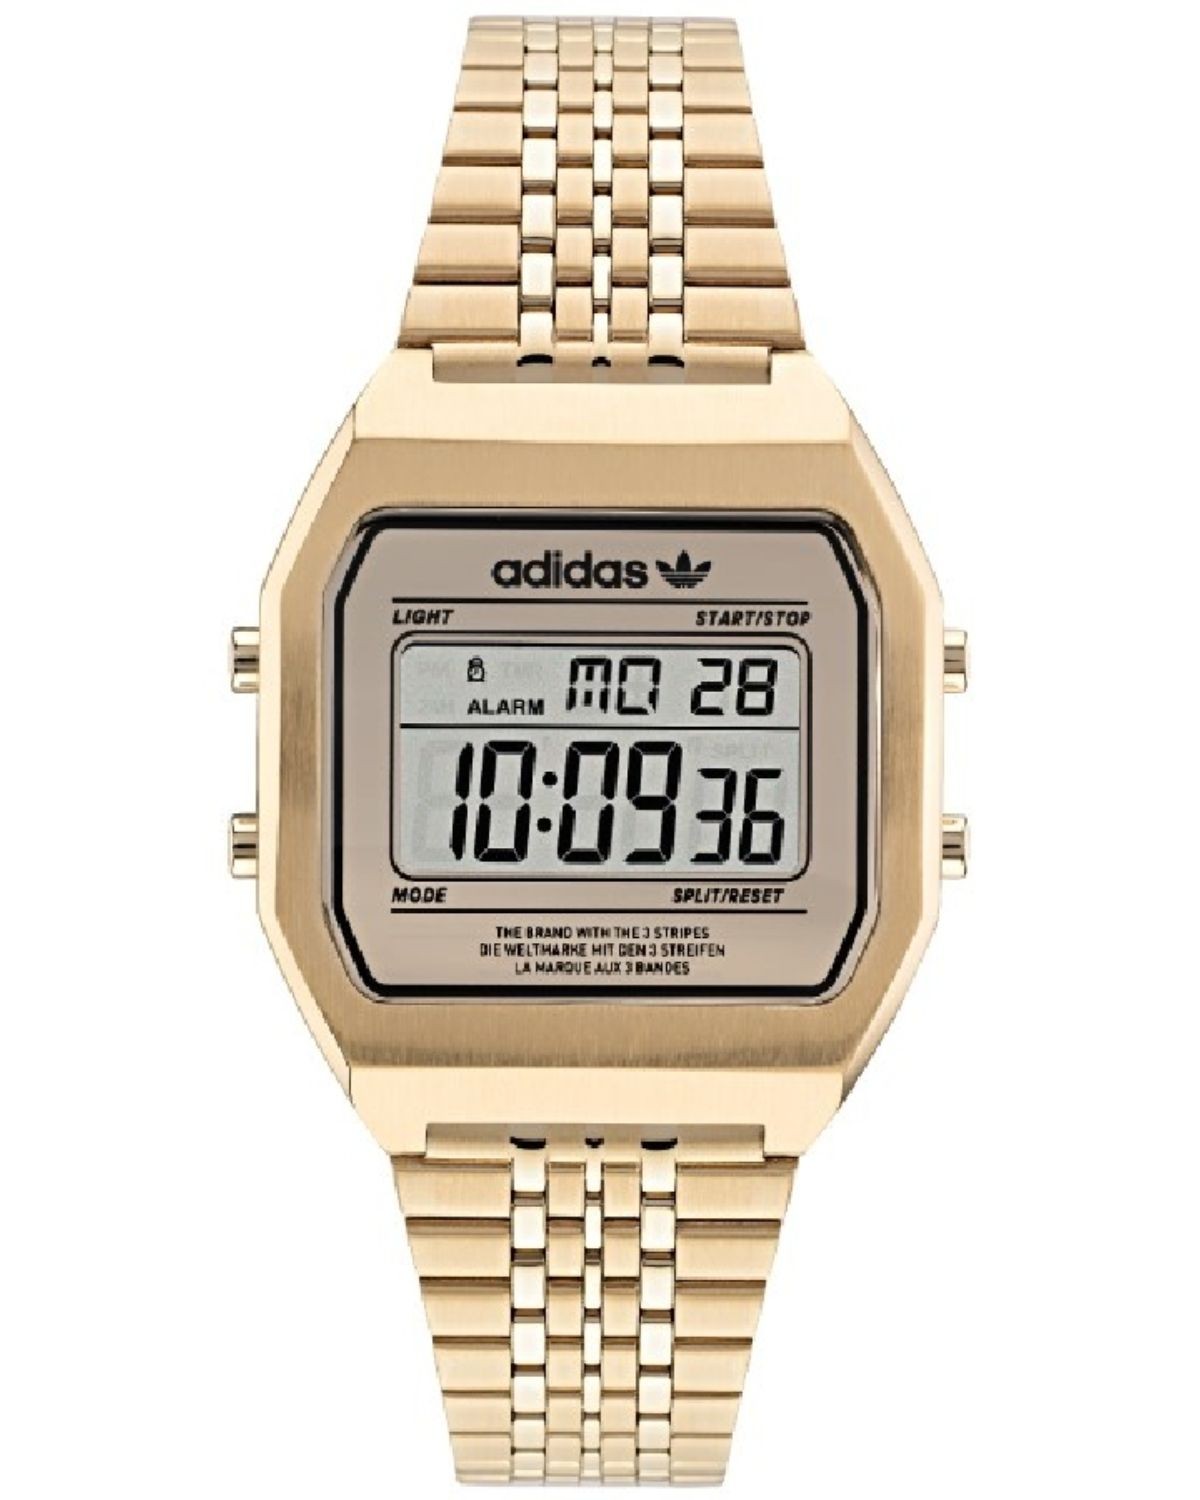 Digital | Digital gold watch Comprar stainless-steel Originals Adidas watch Watch in Men\'s online men\'s Comprar gold Two AOST22074 men\'s | Clicktime.eu» stainless-steel Adidas in Barato Watch Two Adidas